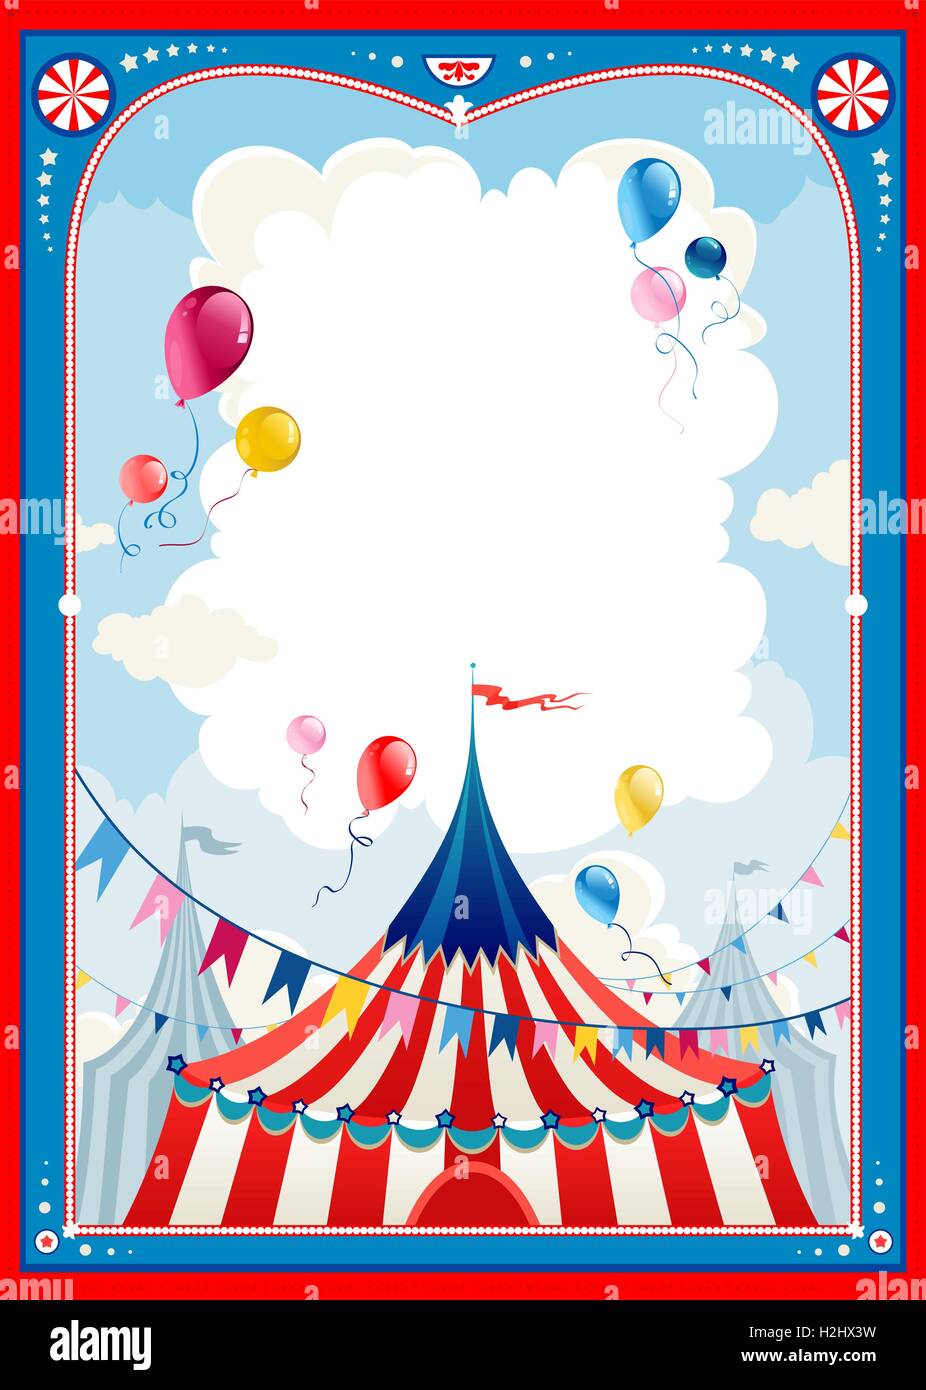 Cadre de cirque Image Vectorielle Stock - Alamy